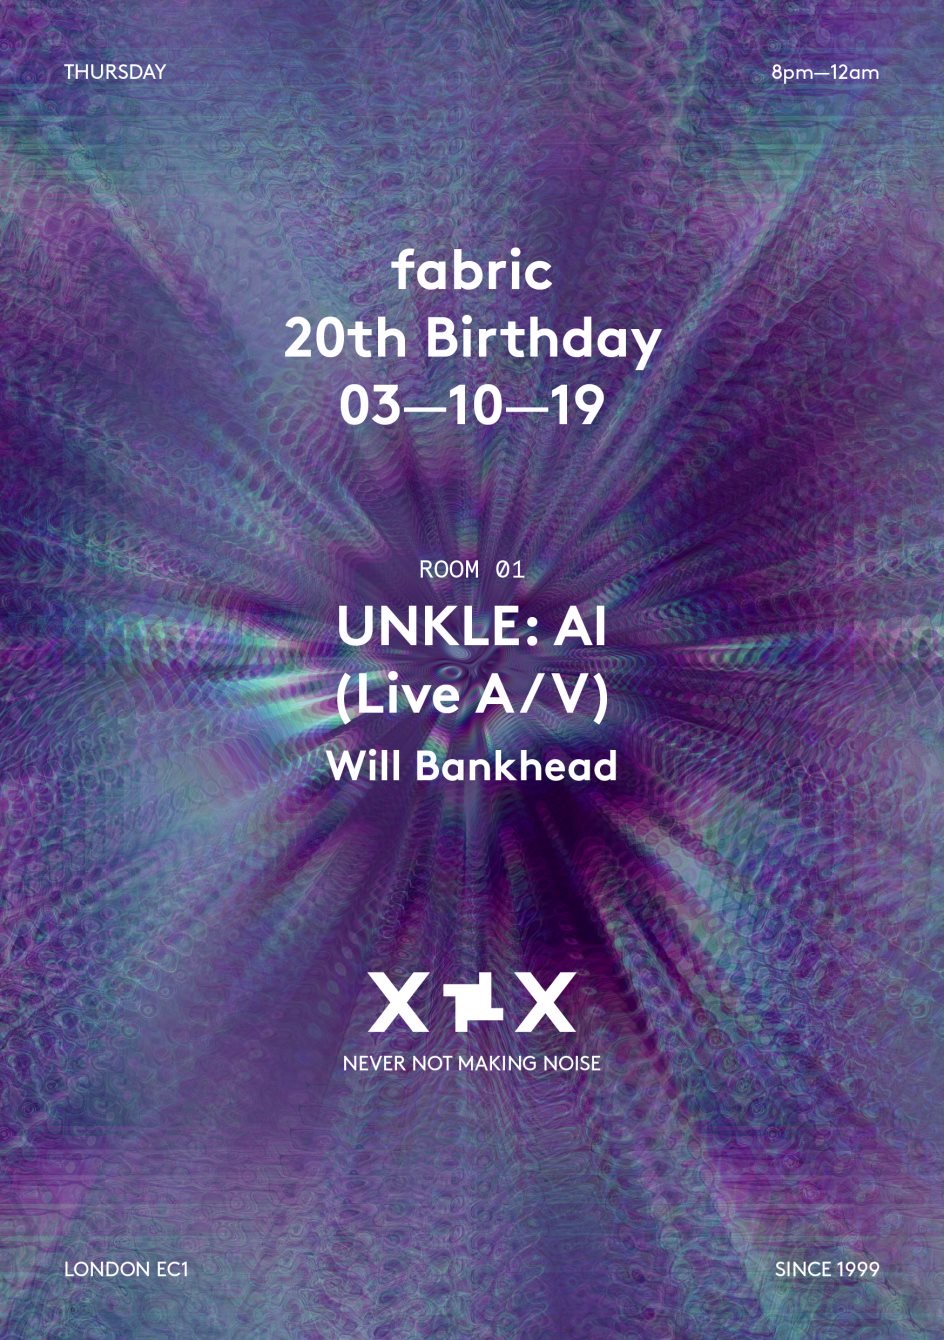 Fabric XX Unkle AI 3 Oct 2019.jpg